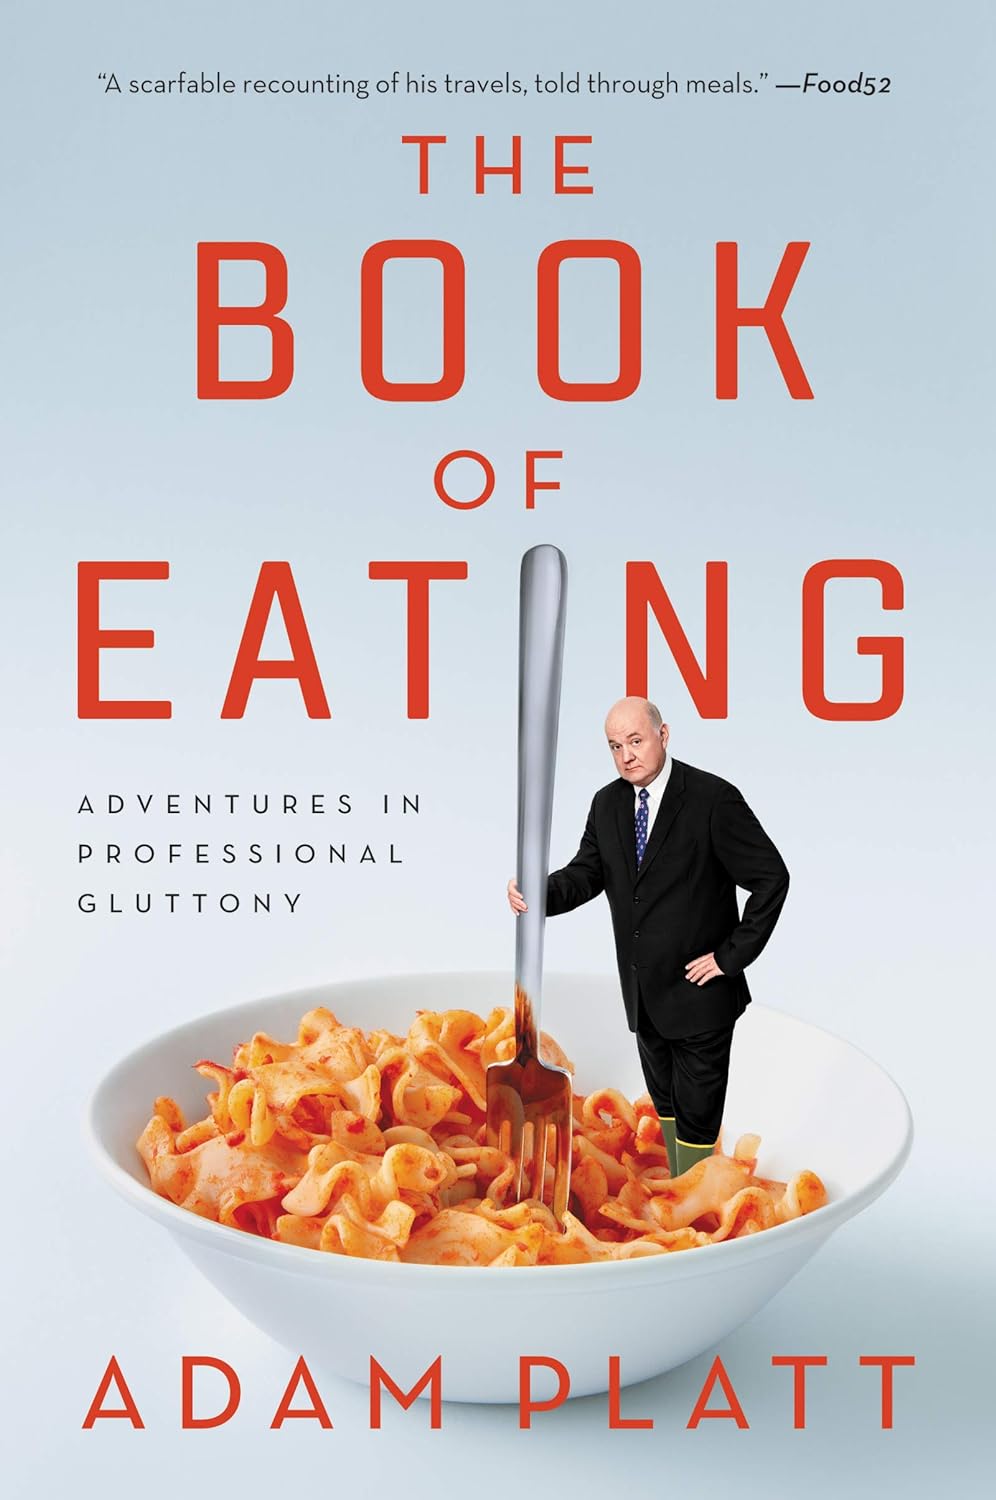 The Book of Eating by Adam Platt